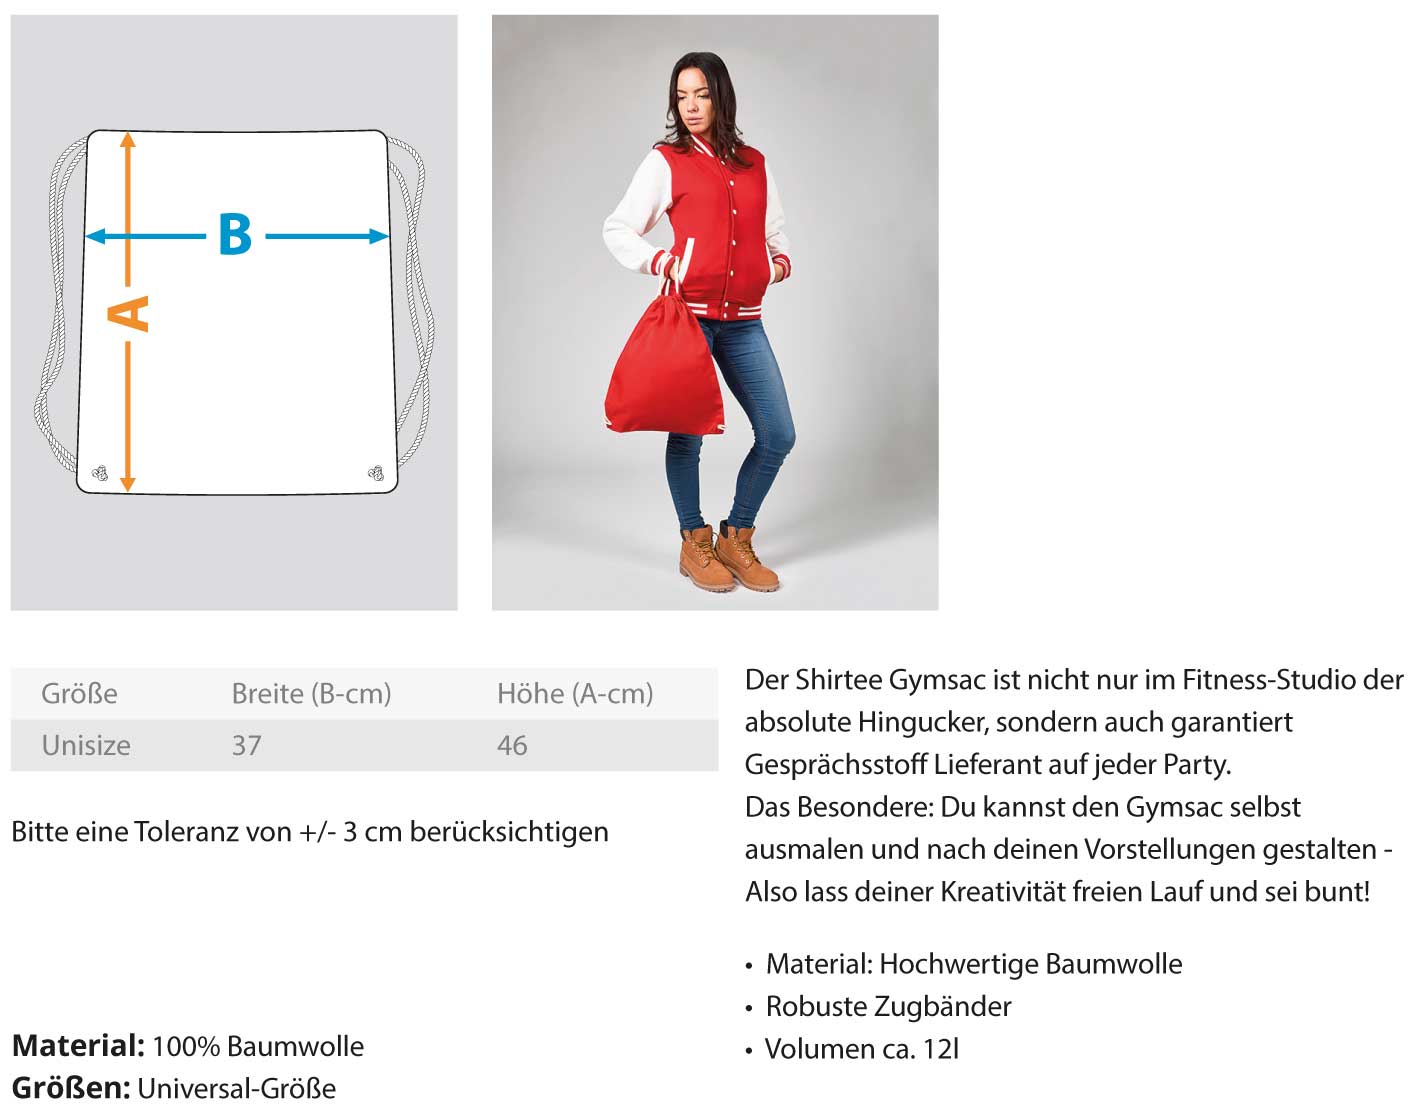 Gerüstbau Rauschmaier  - Baumwoll Gymsac €18.95 Gerüstbauer - Shop >>